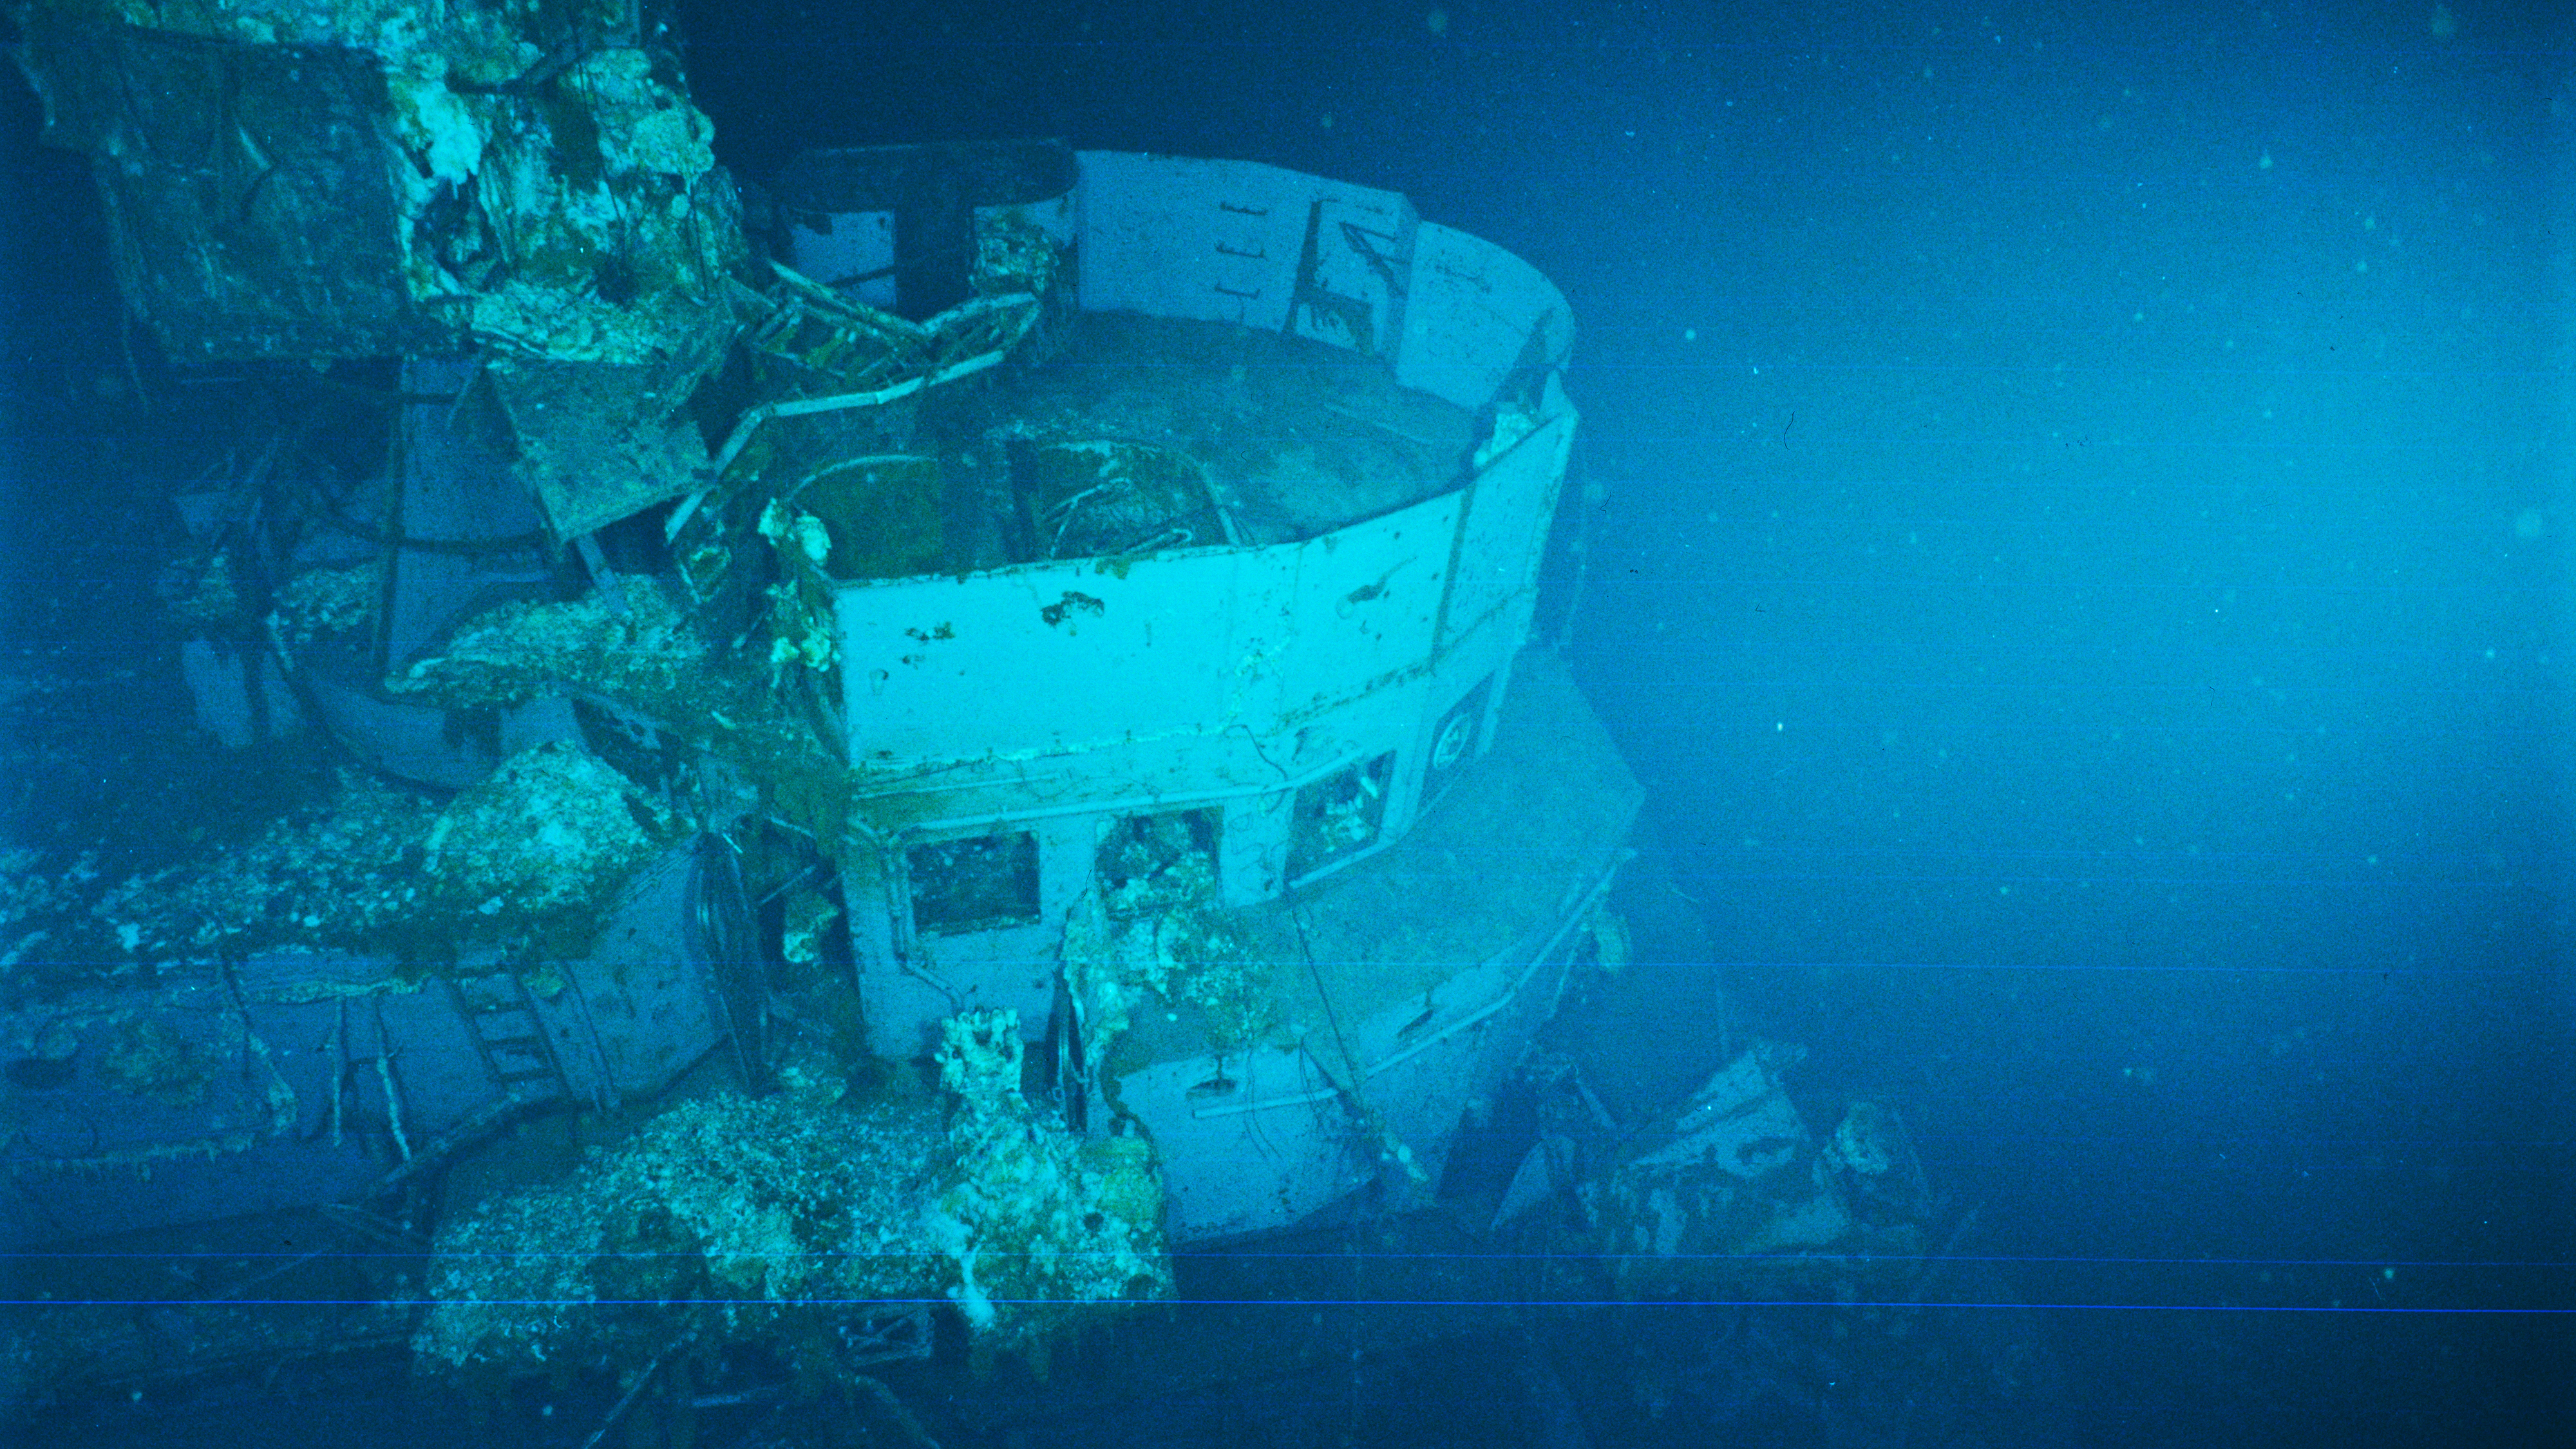 Robert Ballard: The man who found the Titanic has a new quest 